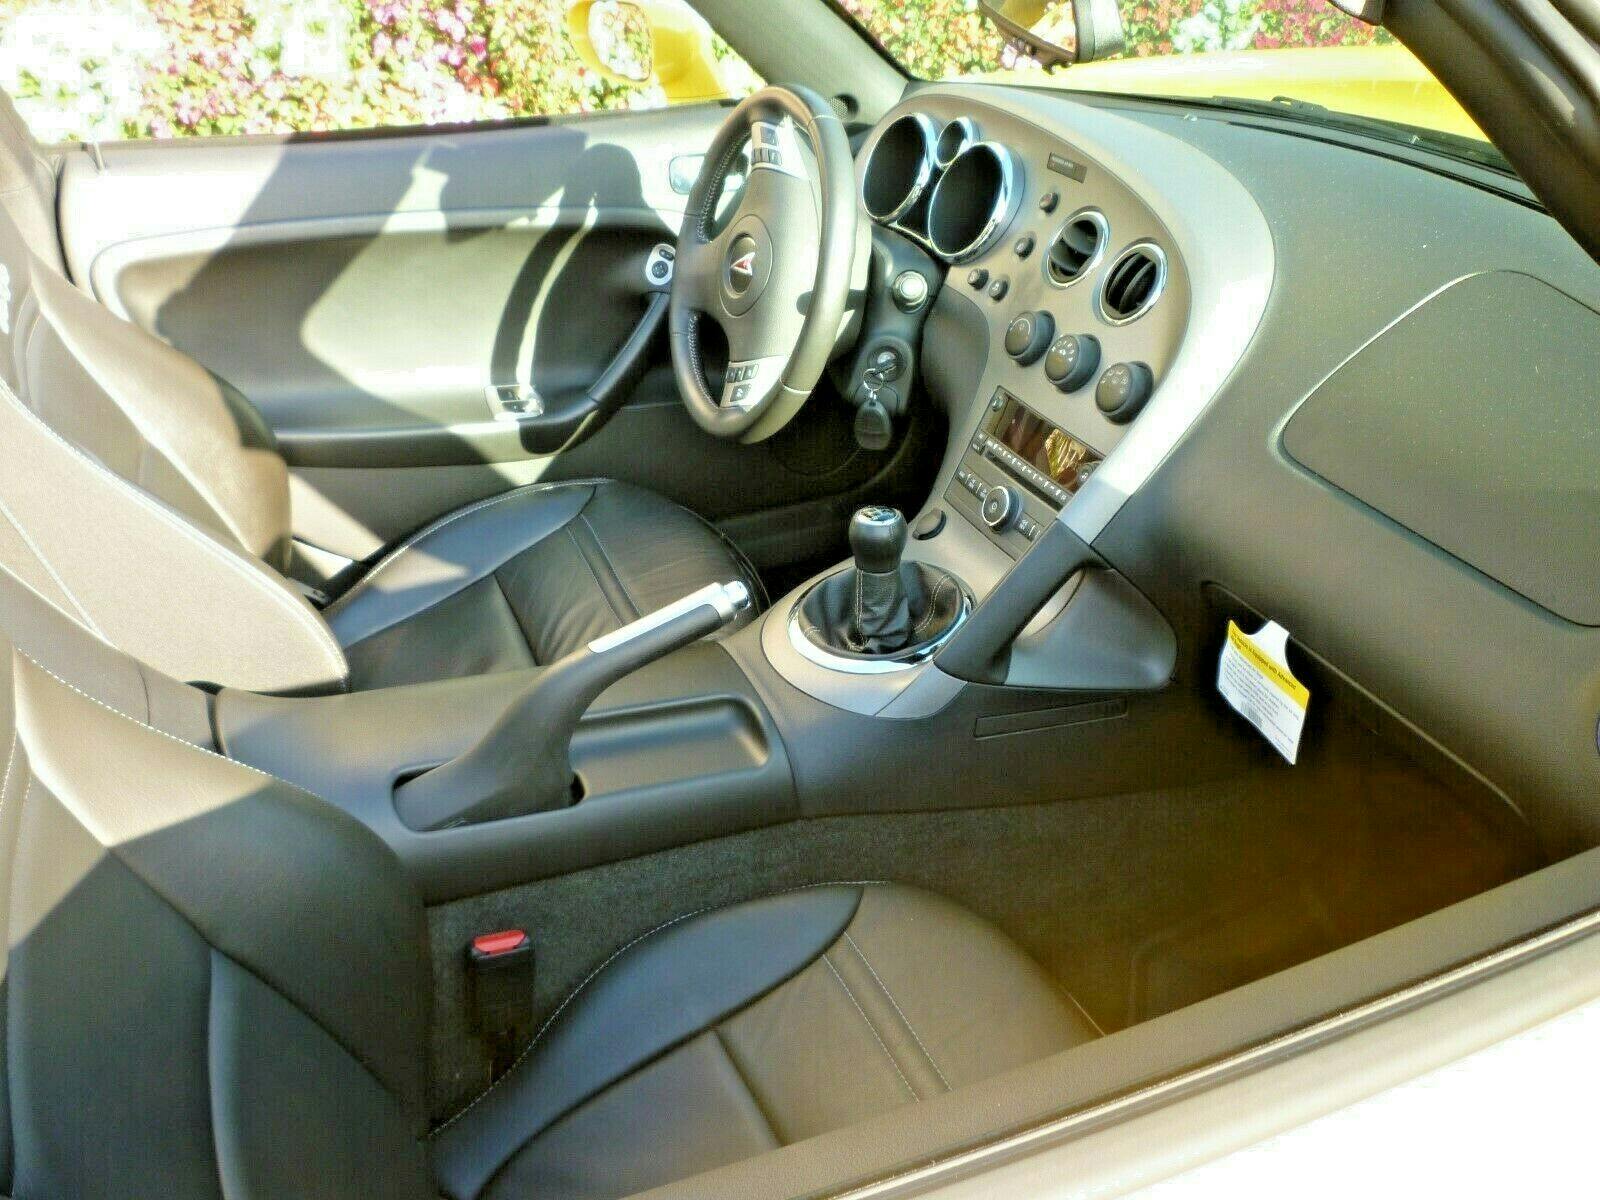 2006 Pontiac Solstice GXP coupe hard top interior manual